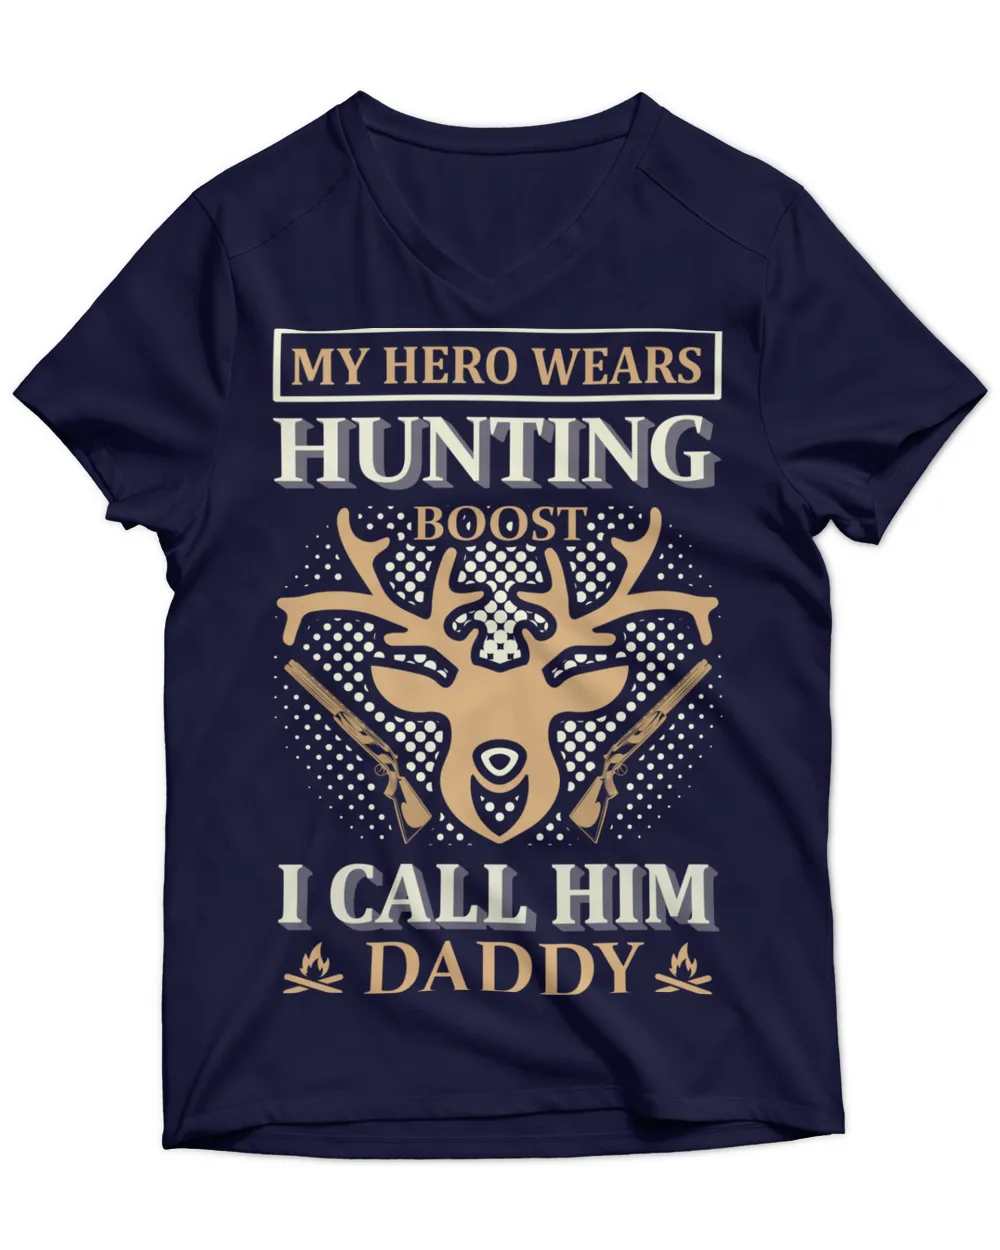 Hunting T-Shirt, Hunting Shirt for Dad, Grandfather (72)